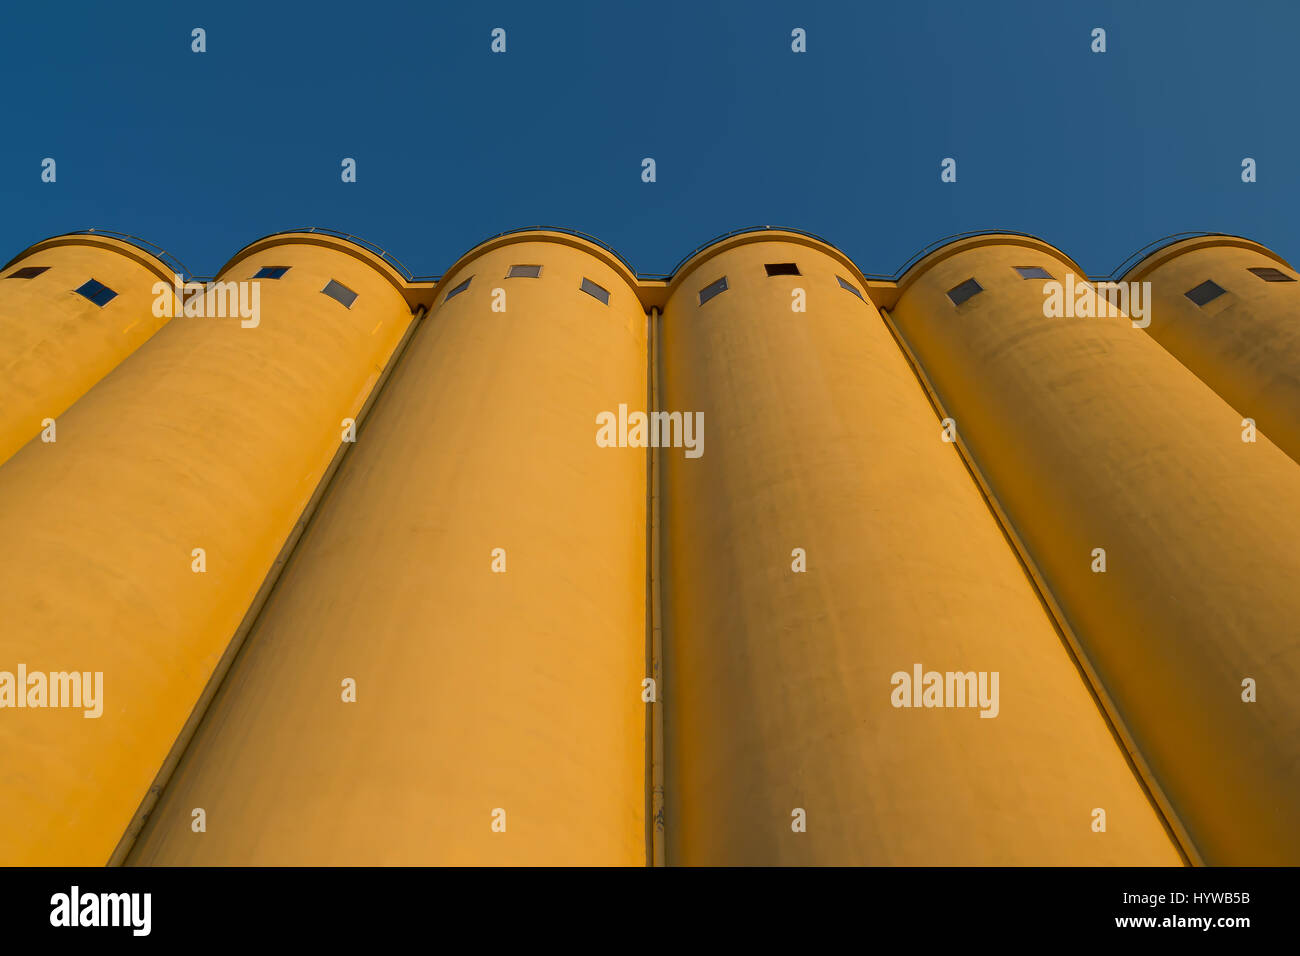 Tower silos facility for grain storage Stock Photo